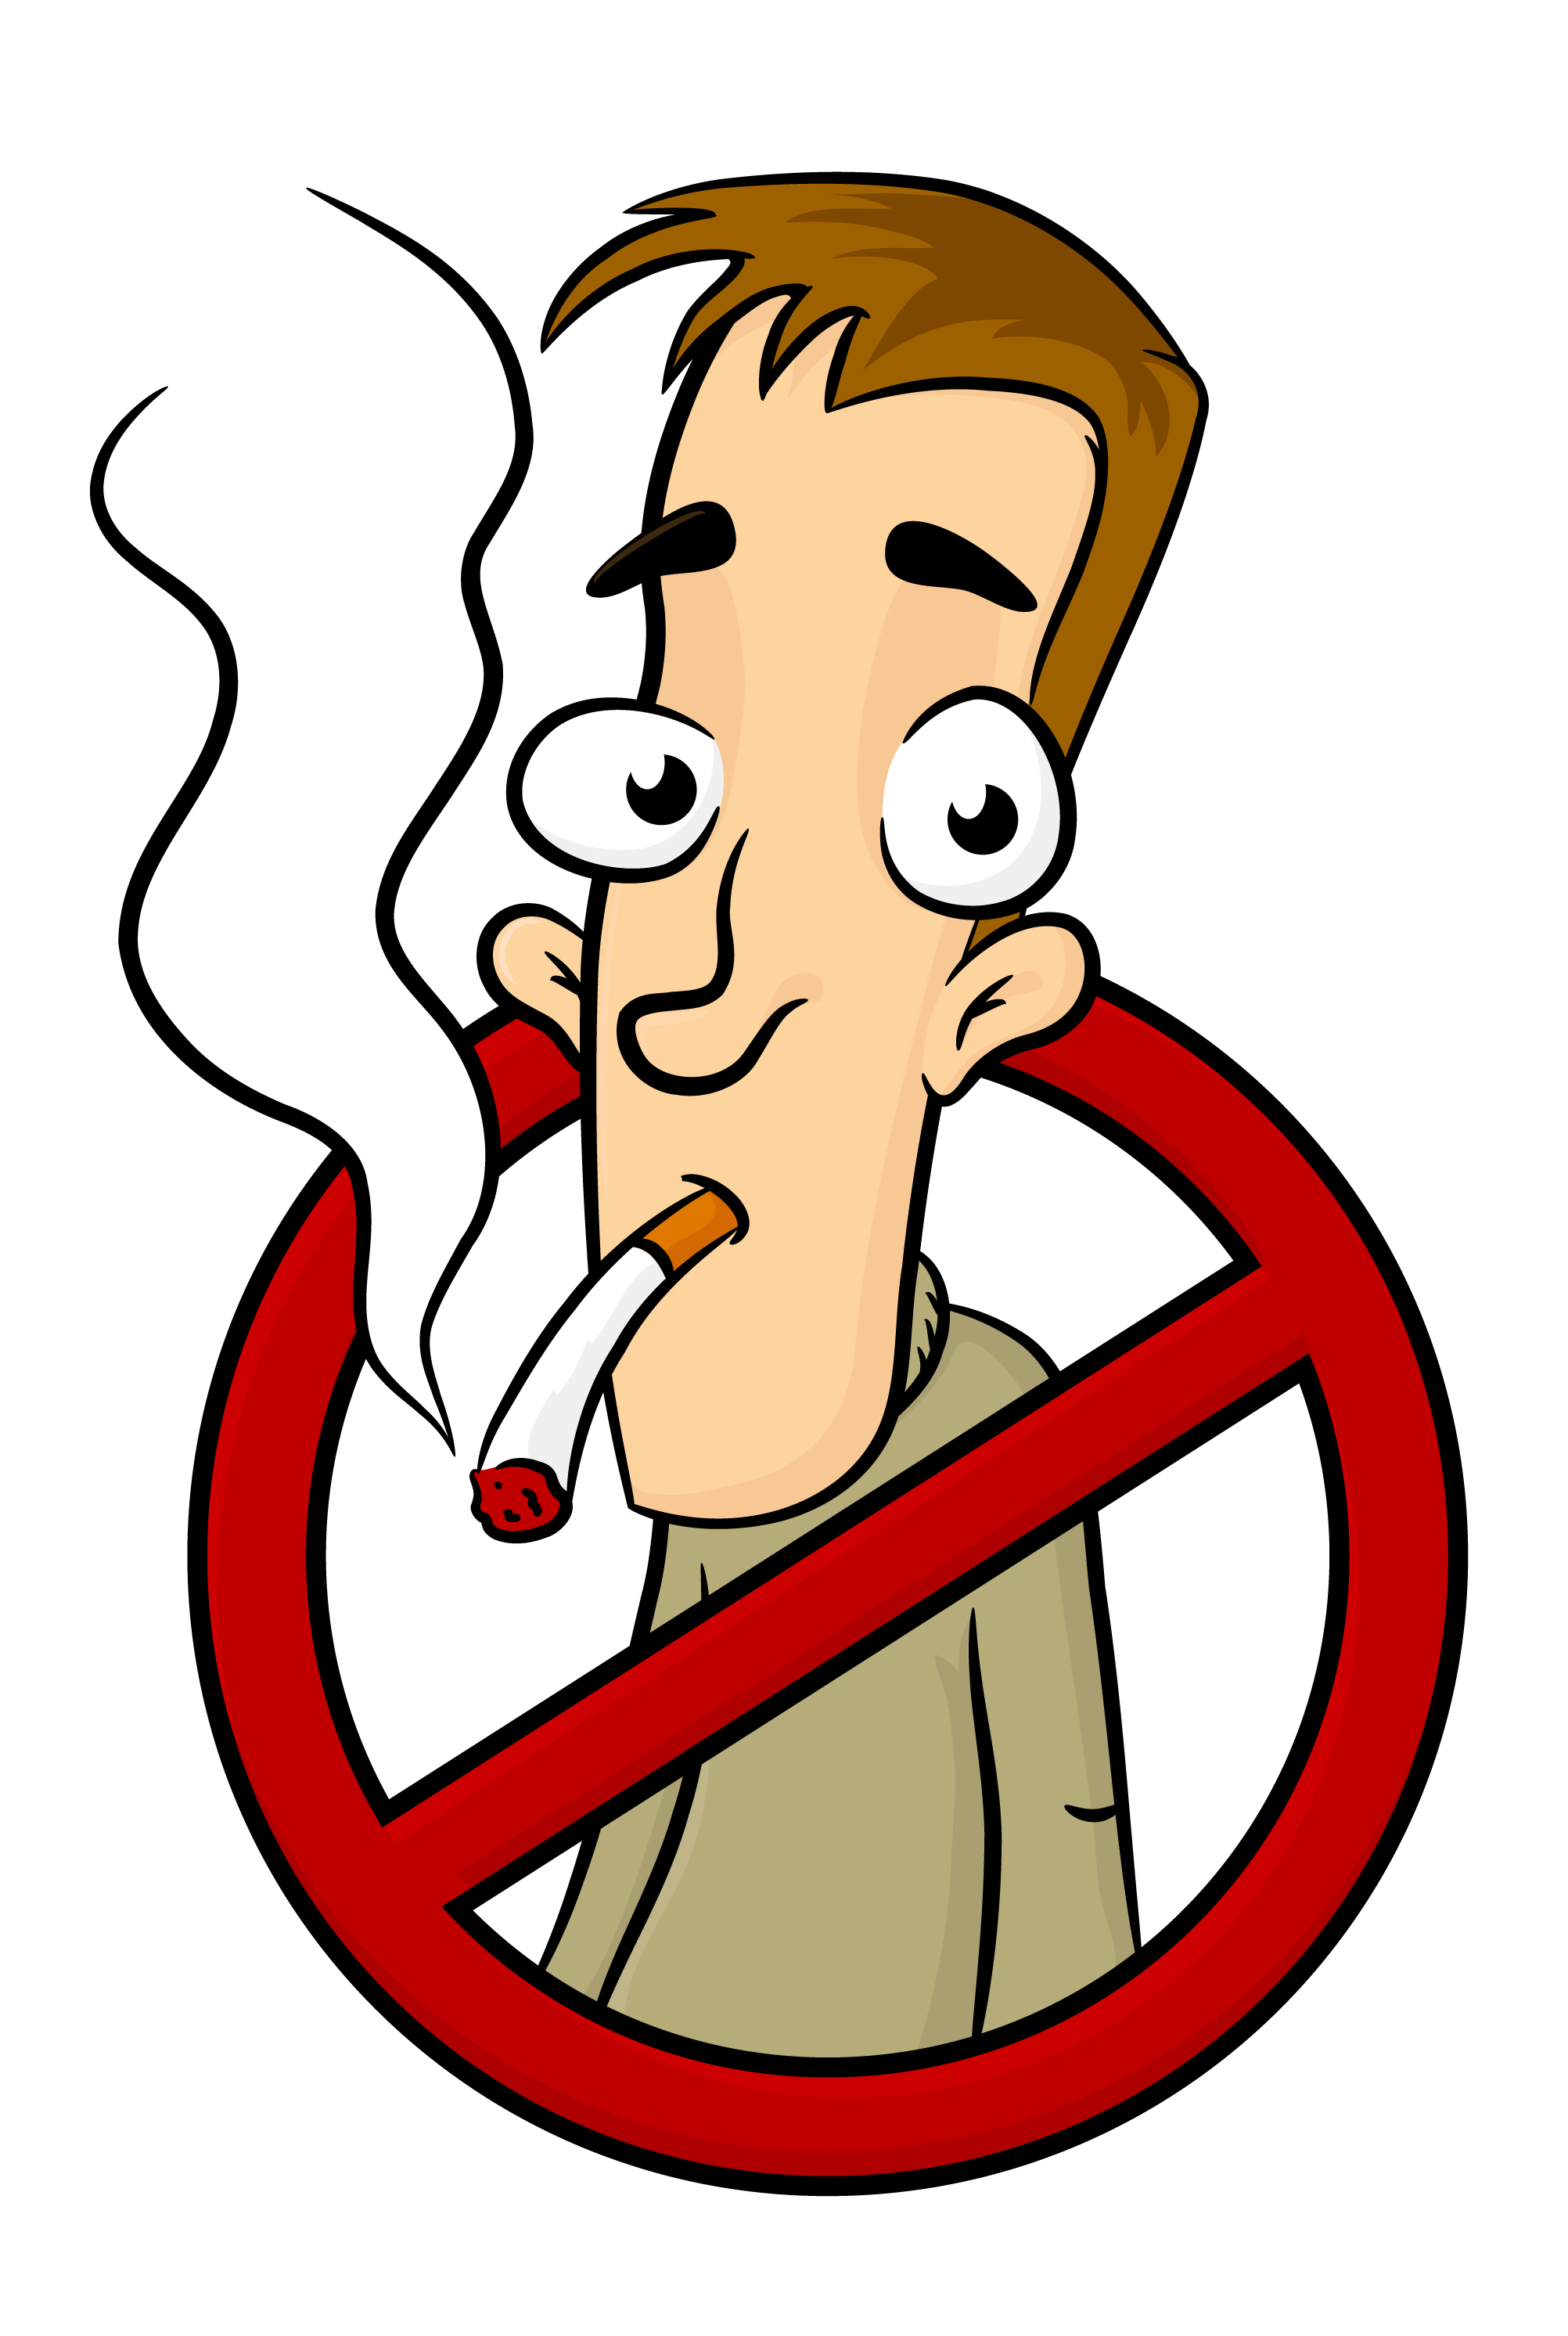 No smoking sign clip art 2